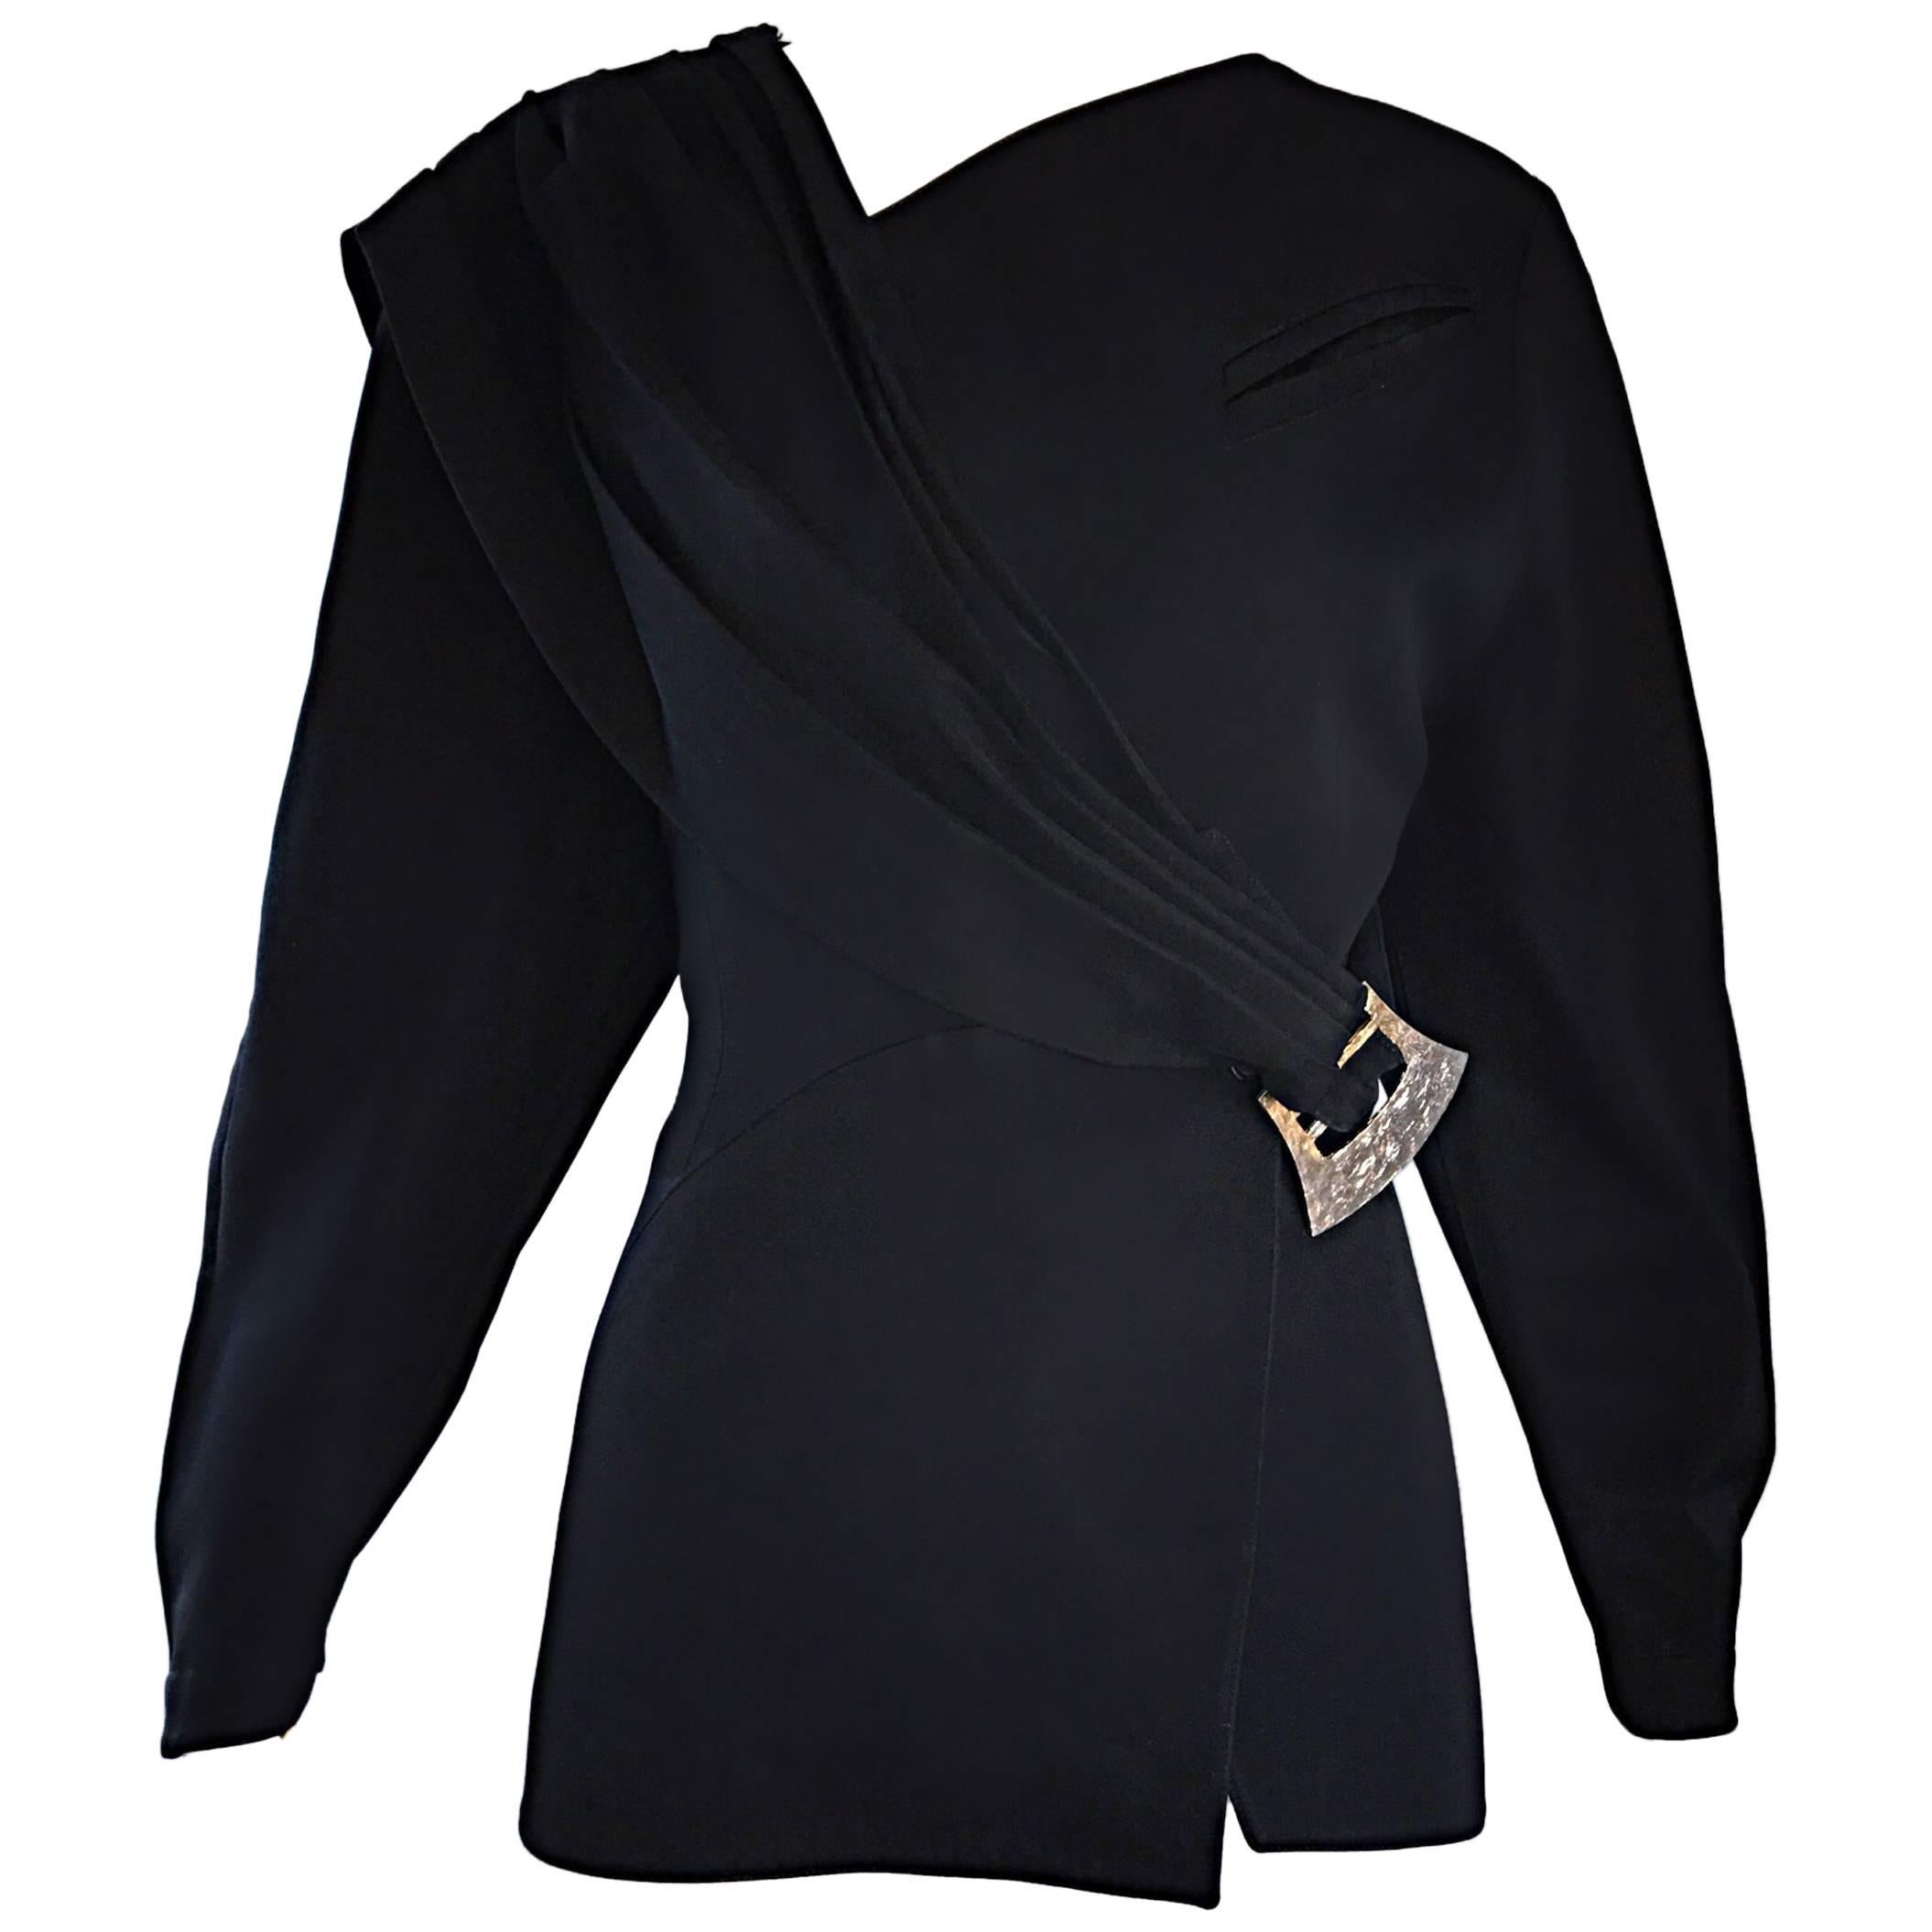 Vintage Thierry Mugler Black Avant Garde 1980s Asymmetrical Sash 80s Jacket 